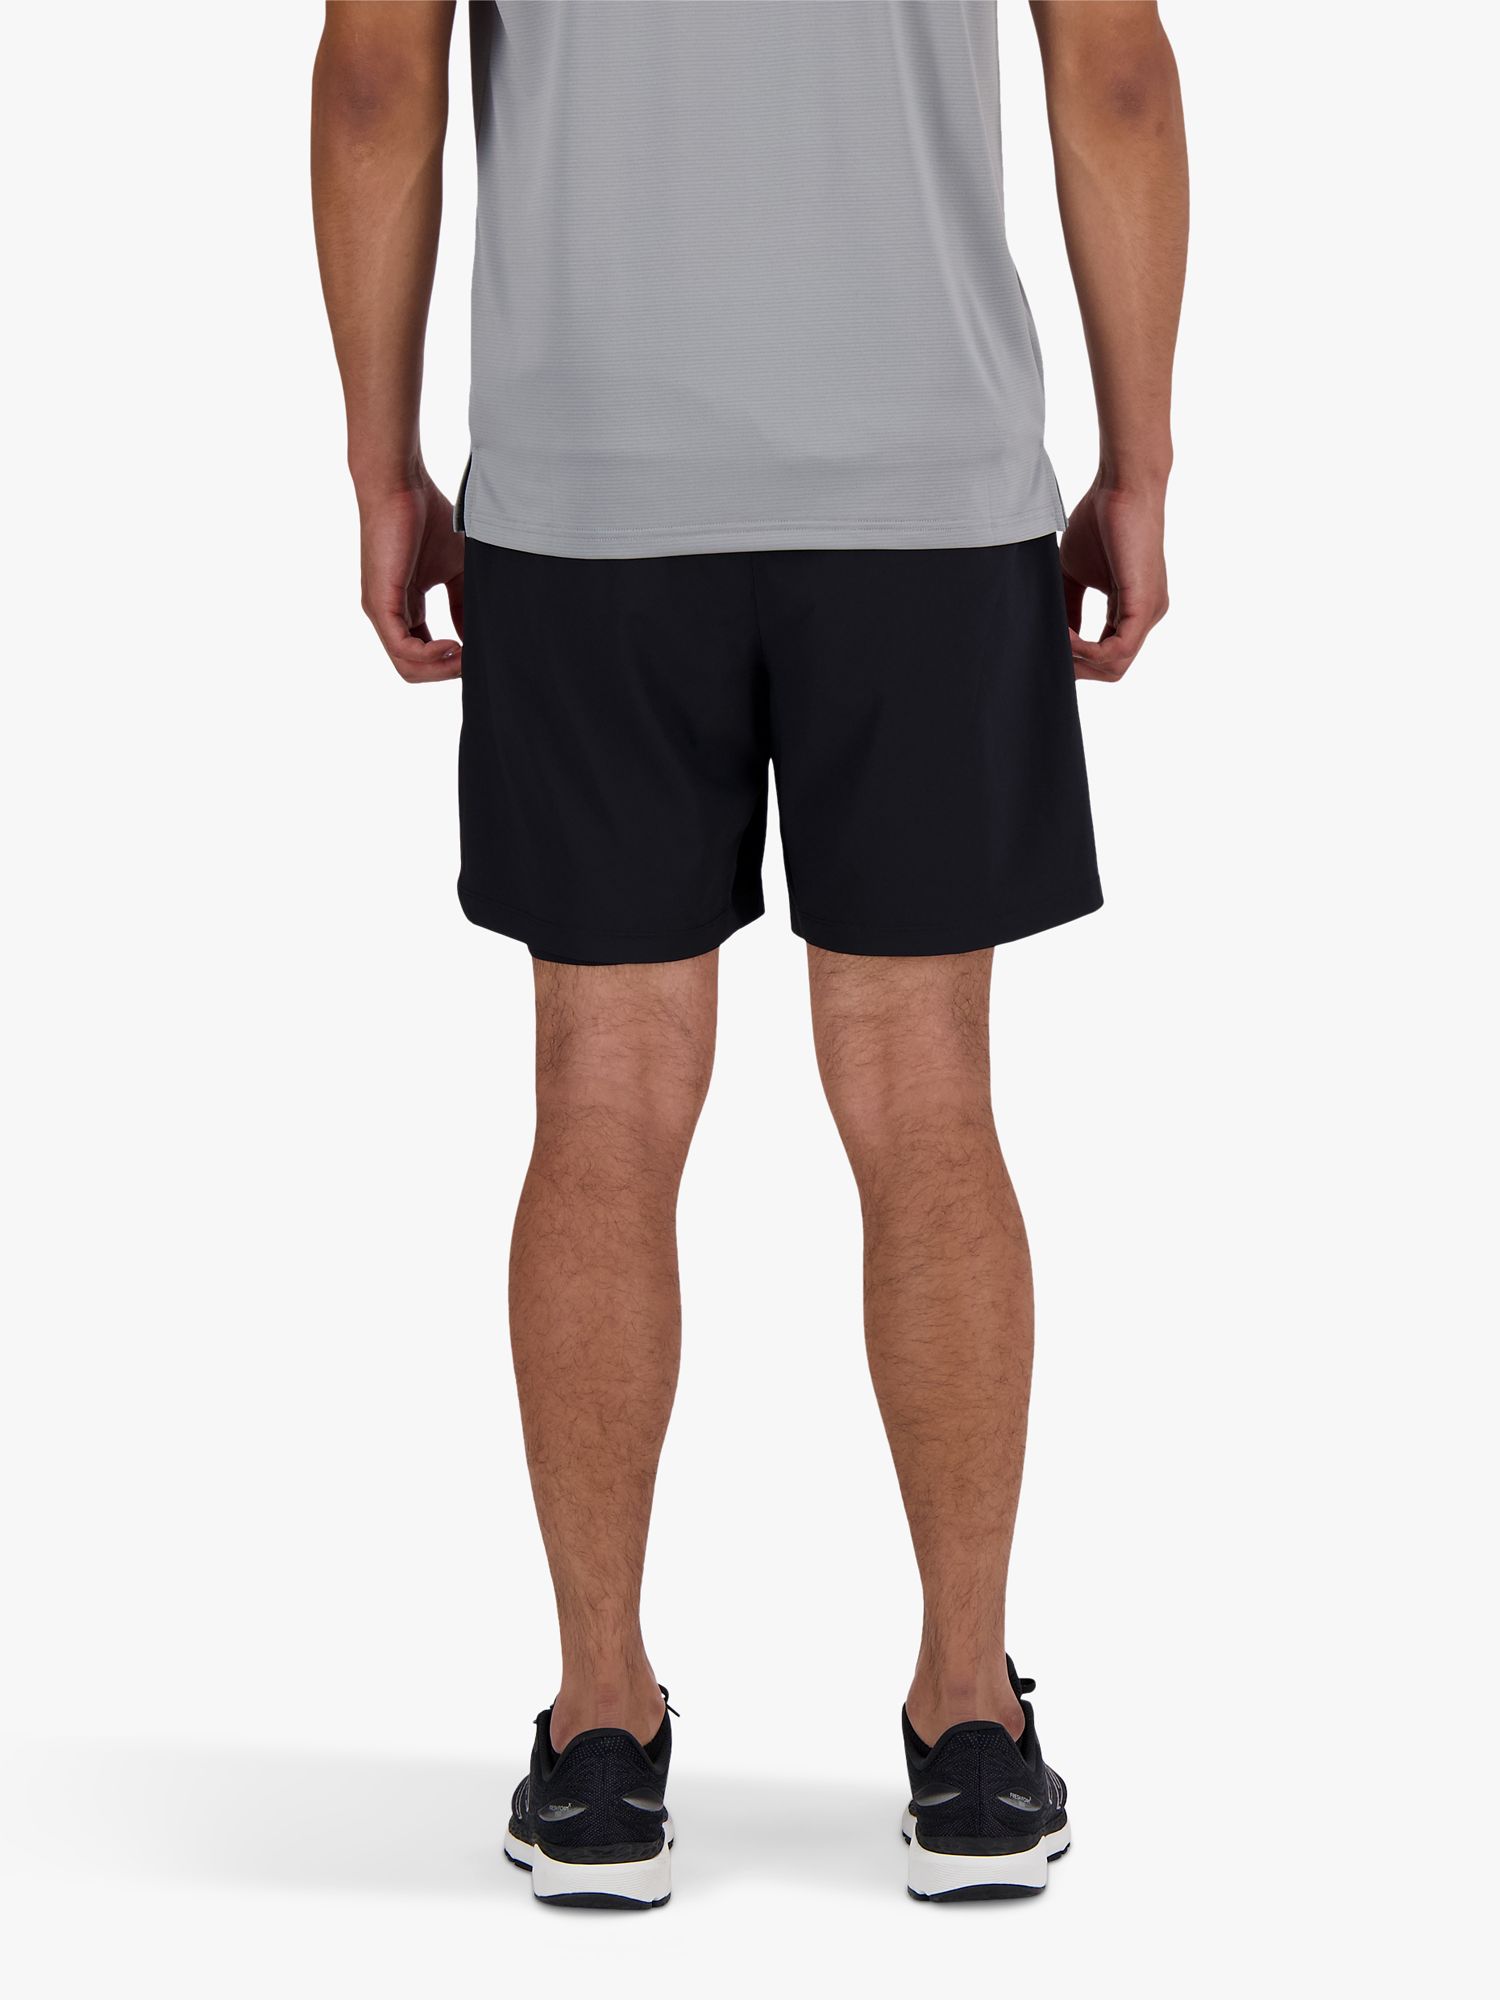 New Balance Seamless 2-in-1 Shorts, Black, XL